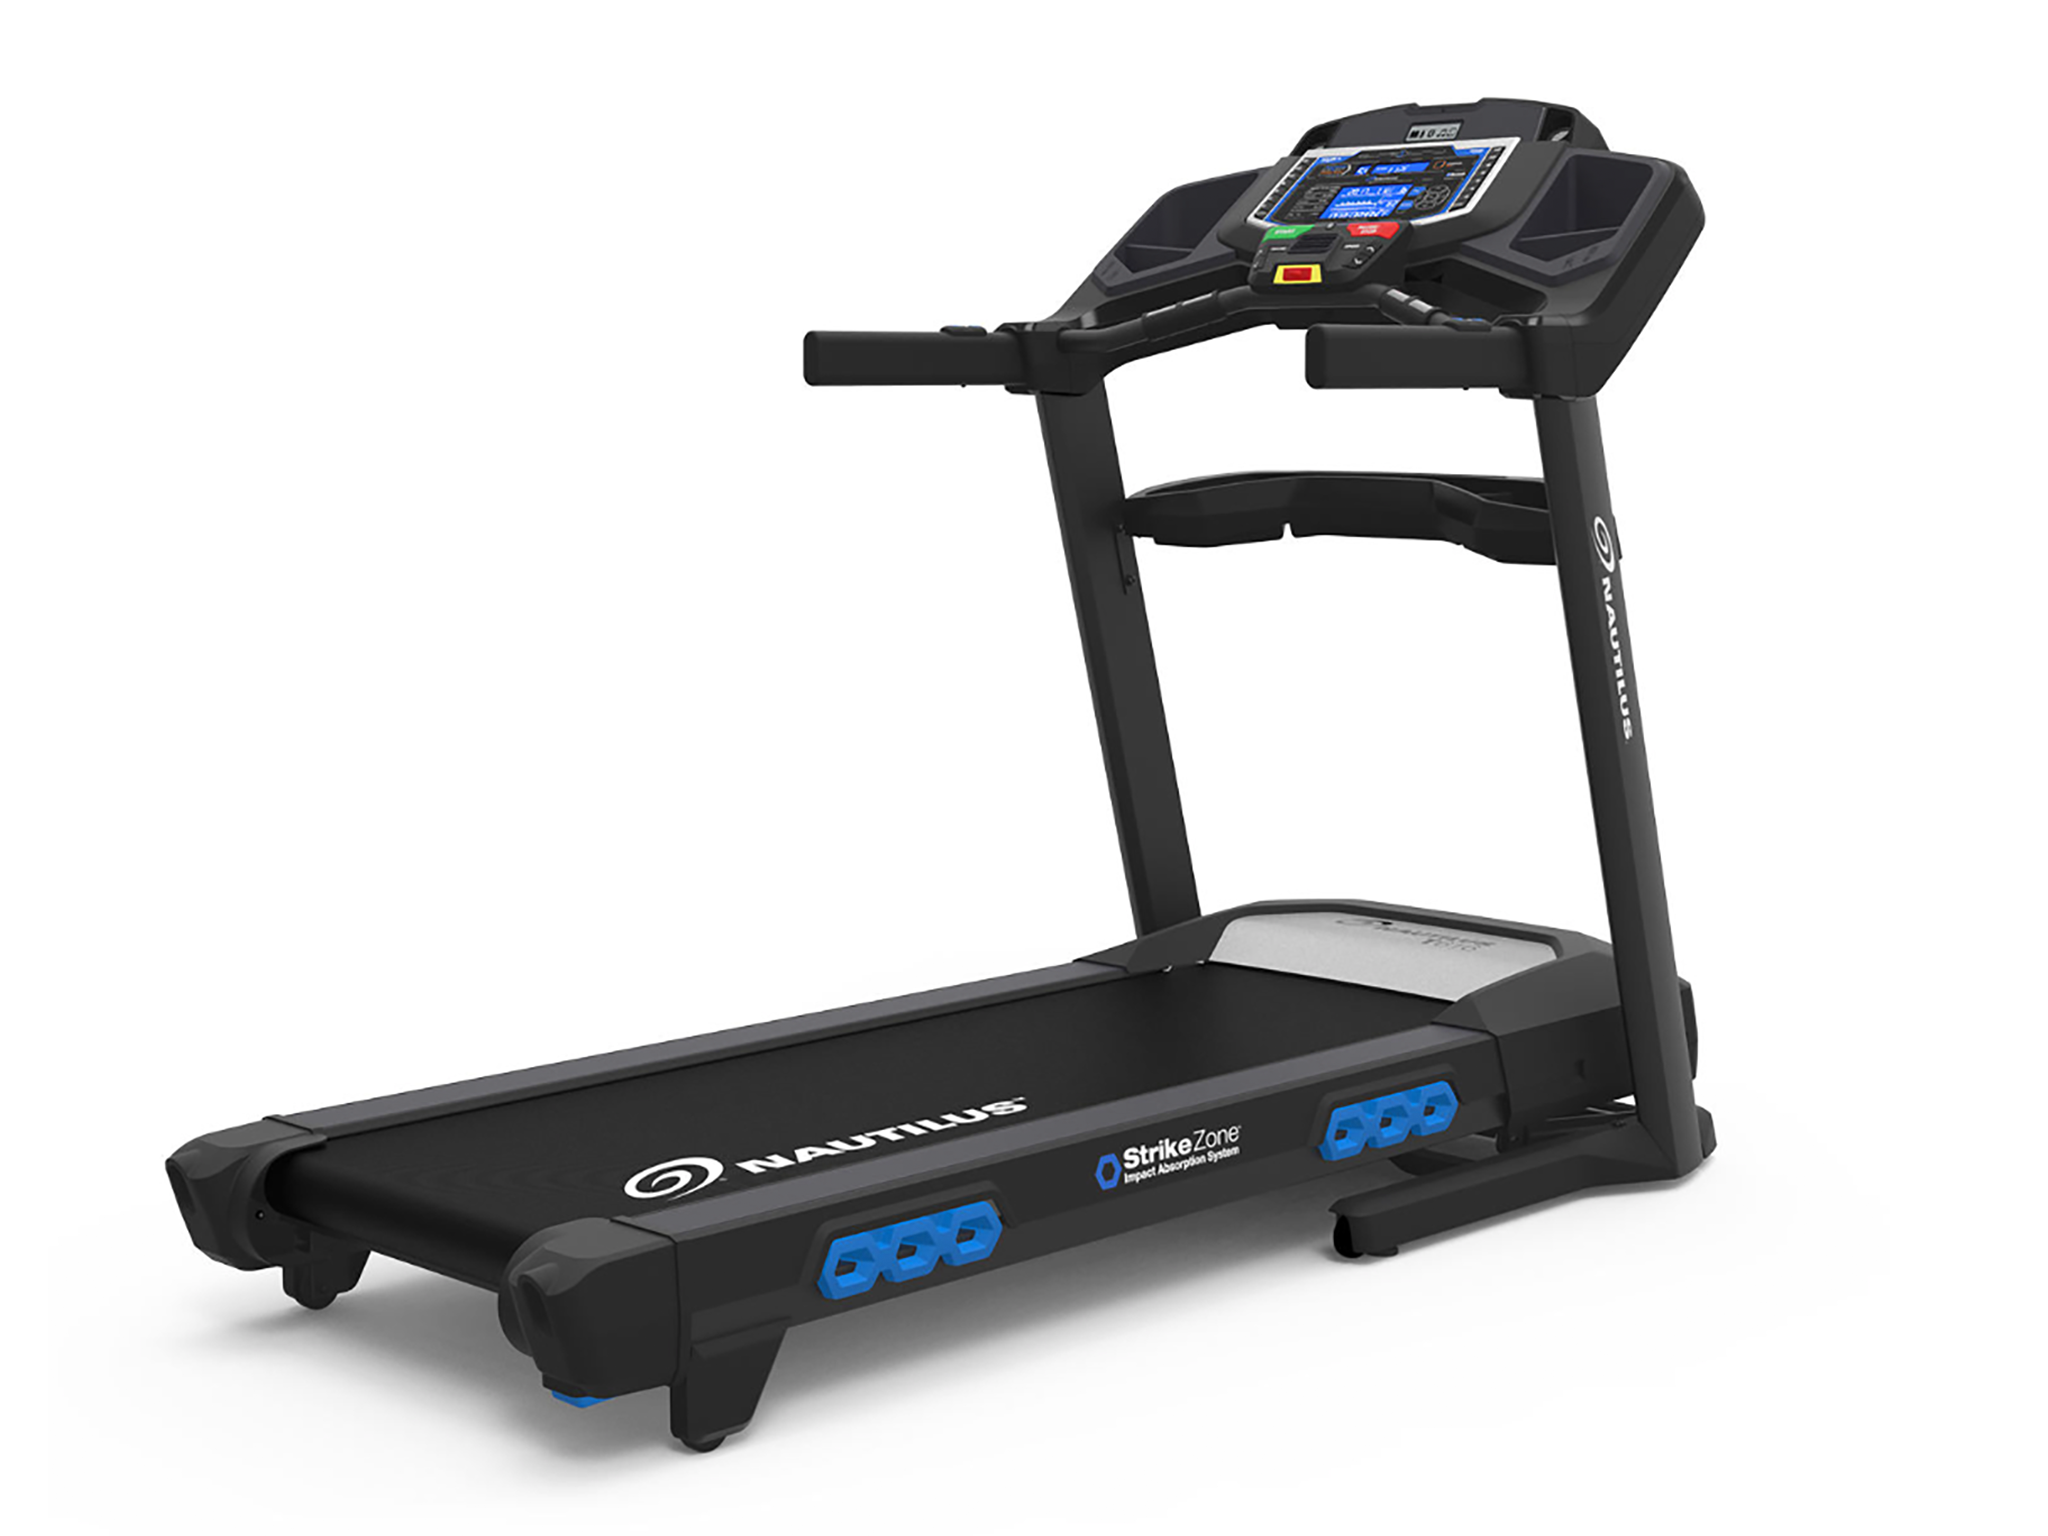 Nautilus T626 folding treadmill